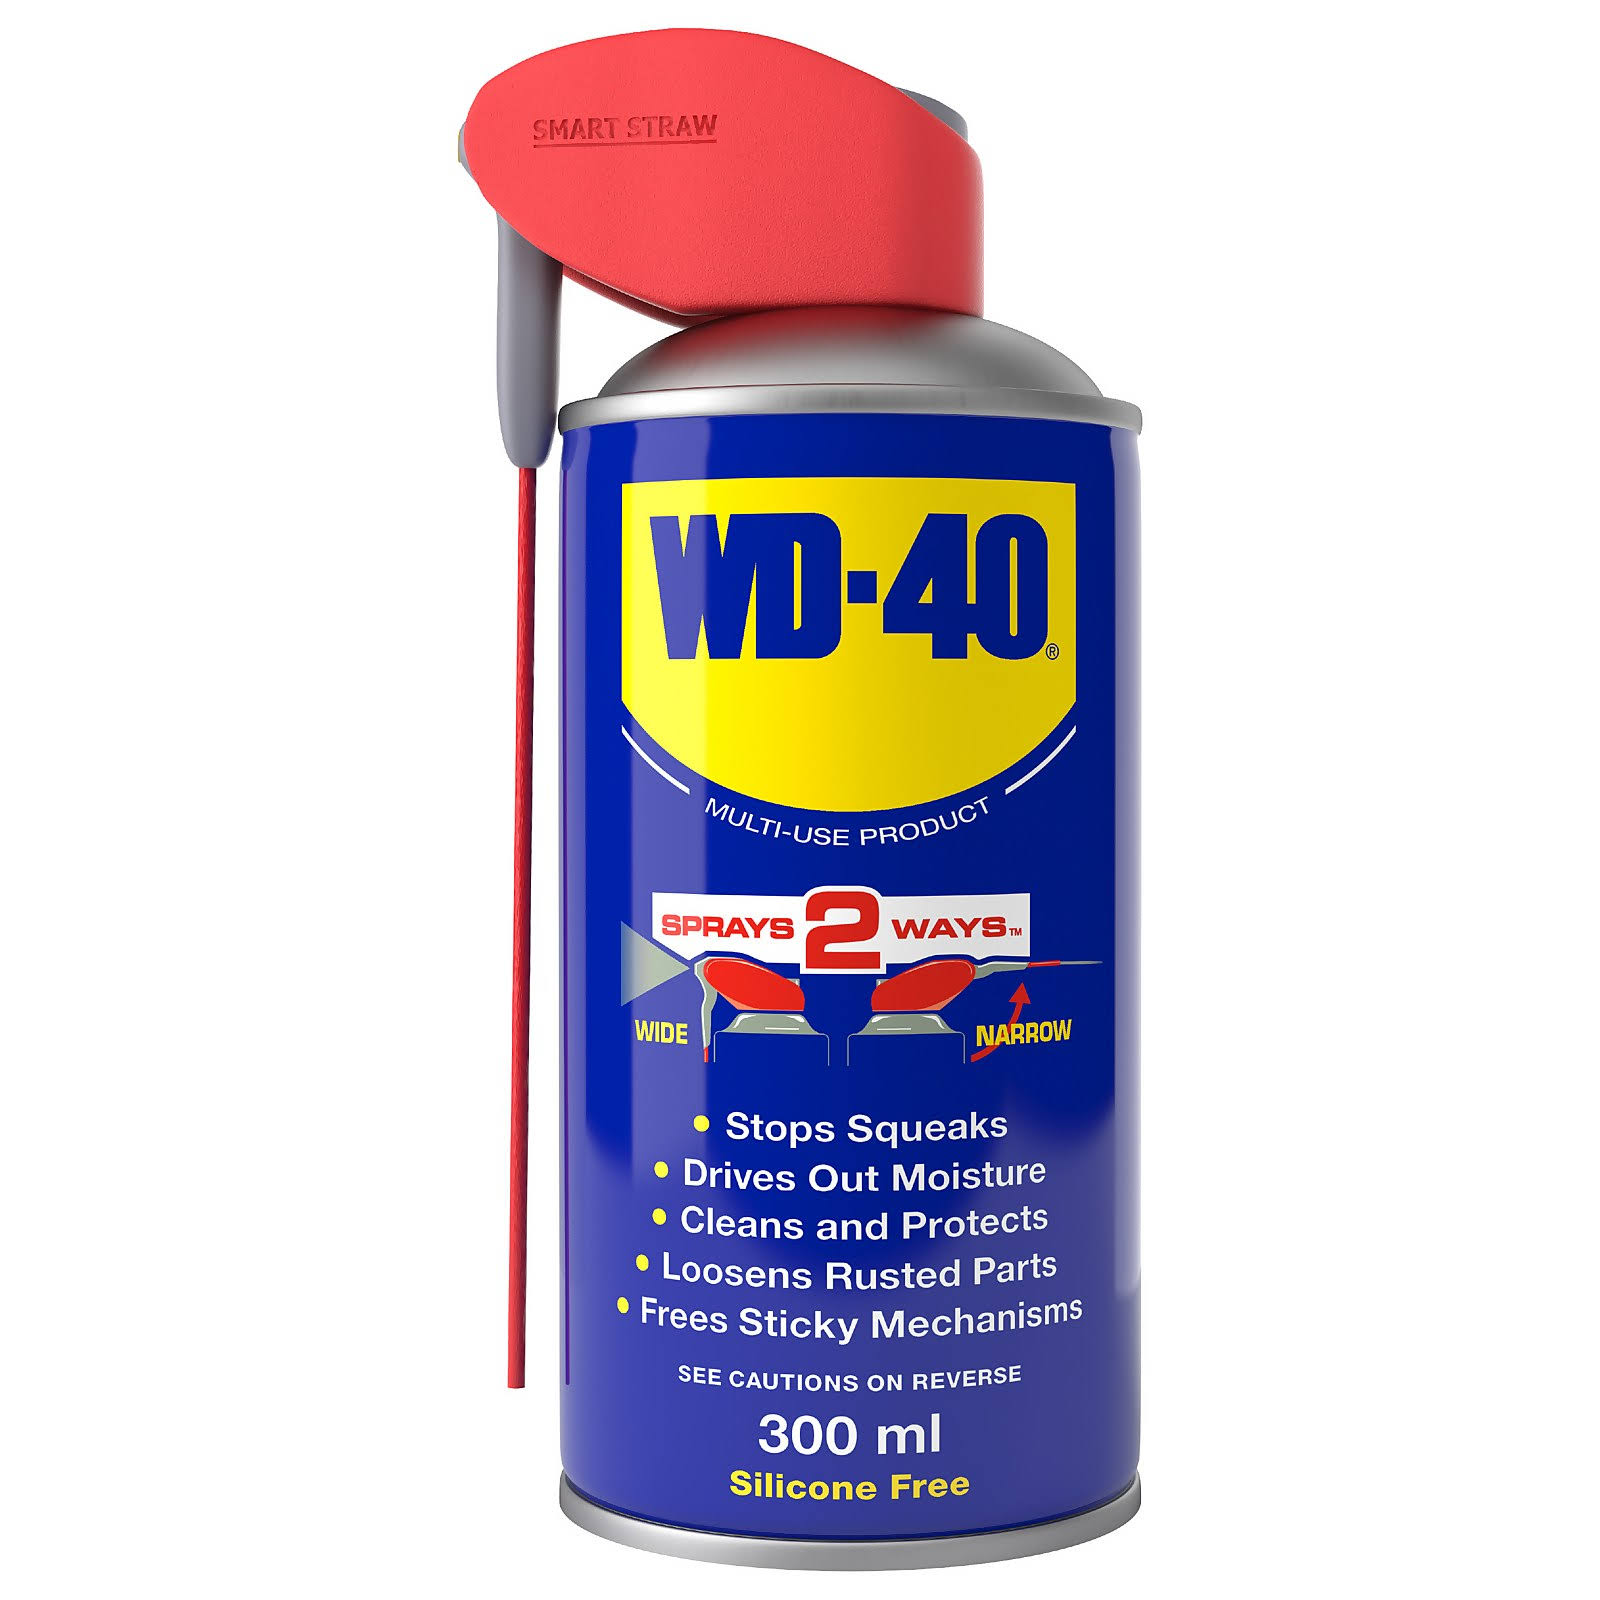 WD40 Multi Use Maintenance Spray - With Smart Straw, 300ml